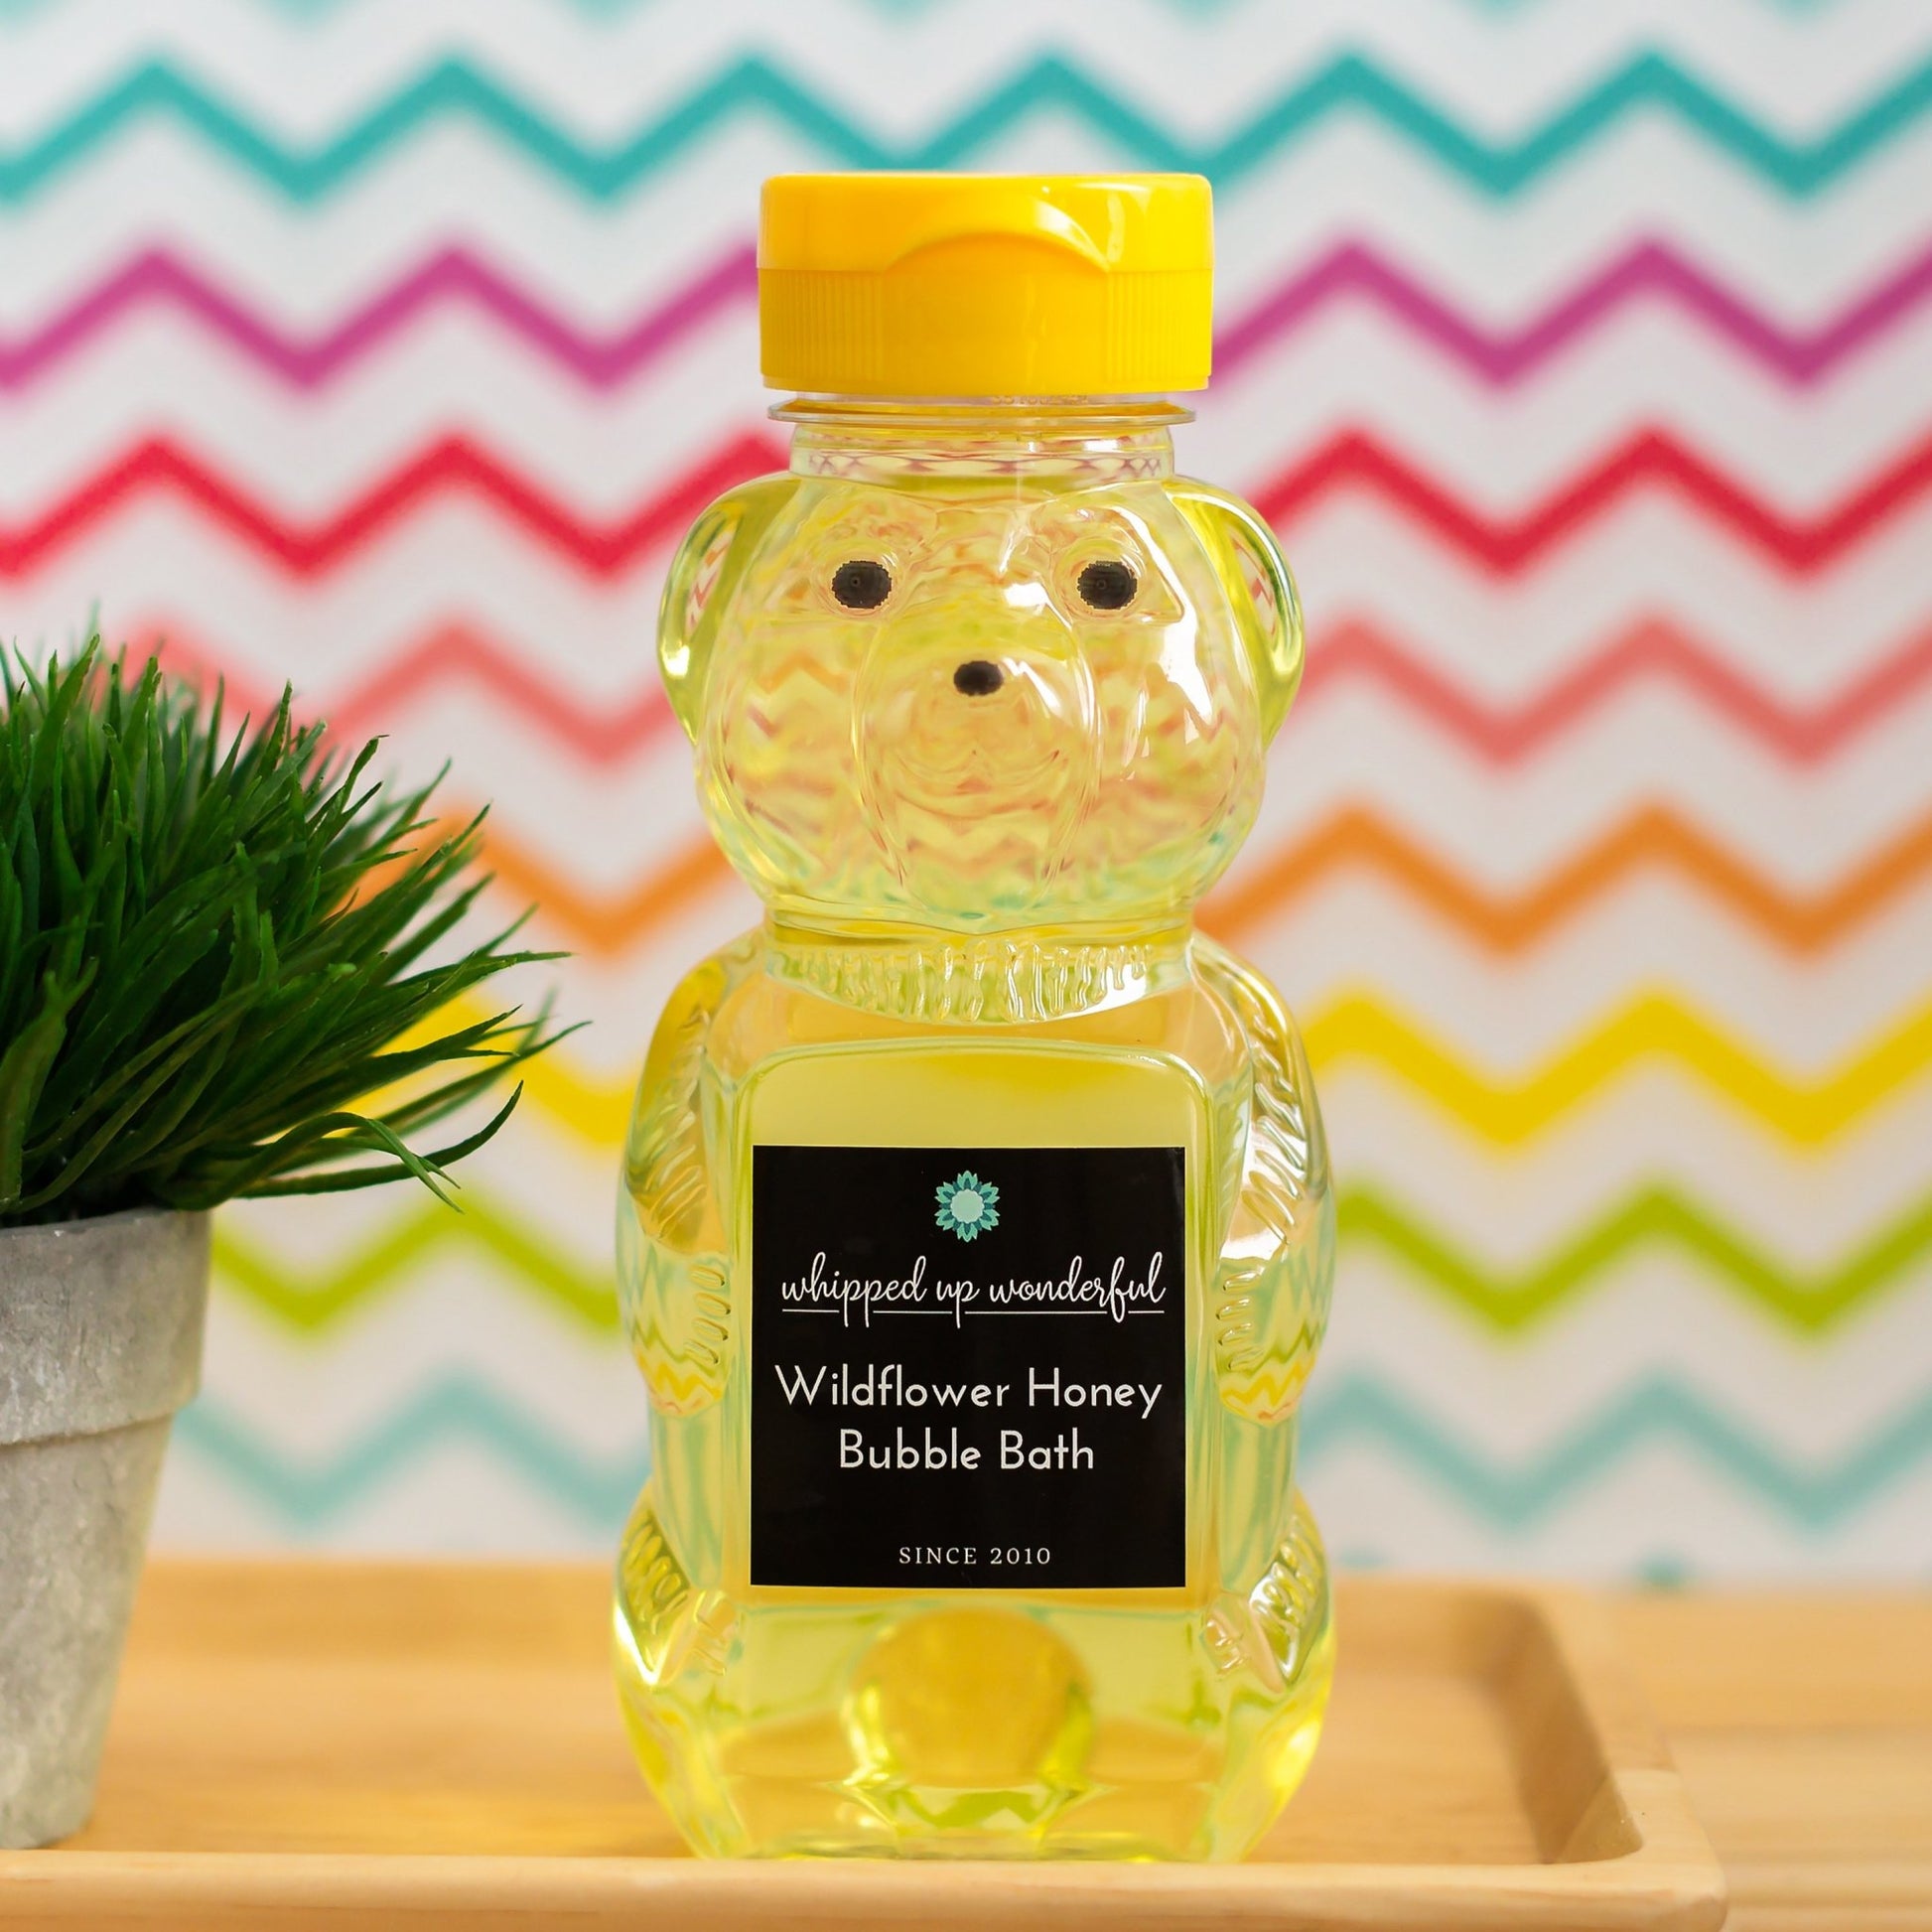 Wildflower Honey Body Wash & Bubble Bath - Whipped Up Wonderful